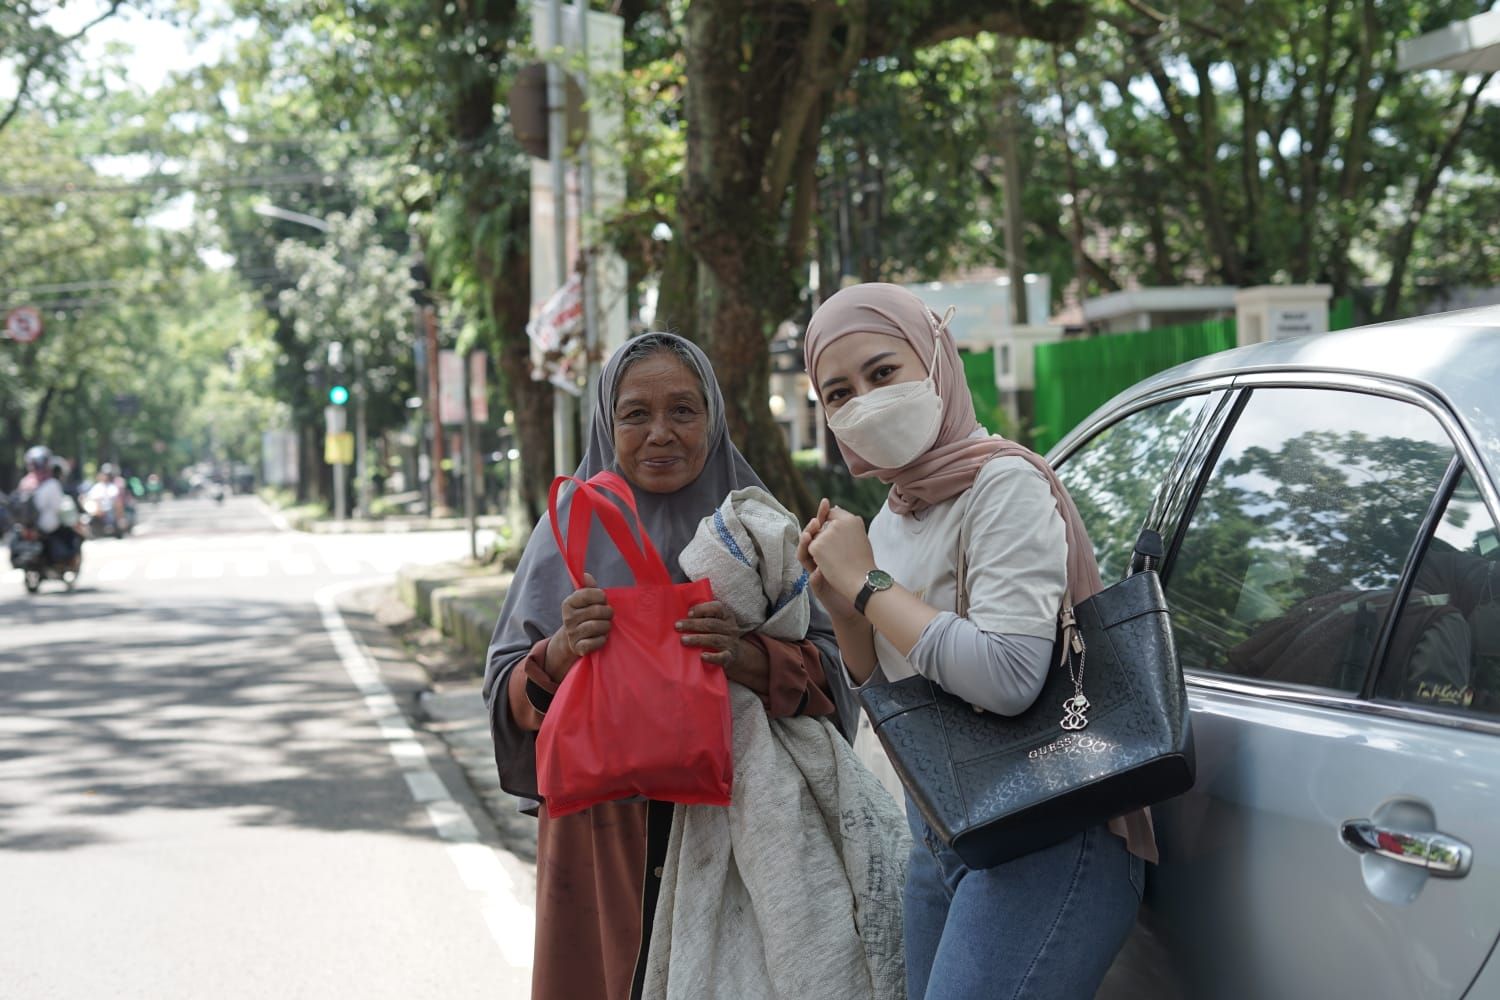 Klinik MS Glow Bandung melakukan kegiatan bakti sosial dengan manyalurkan bantuan berupa paket sembako kepada warga sekitar klinik yang membutuhkan di Kawasan Jalan Lombok, Kota Bandung, Rabu, 8 Desember 2021./Edi Kusnaedi/Galamedia